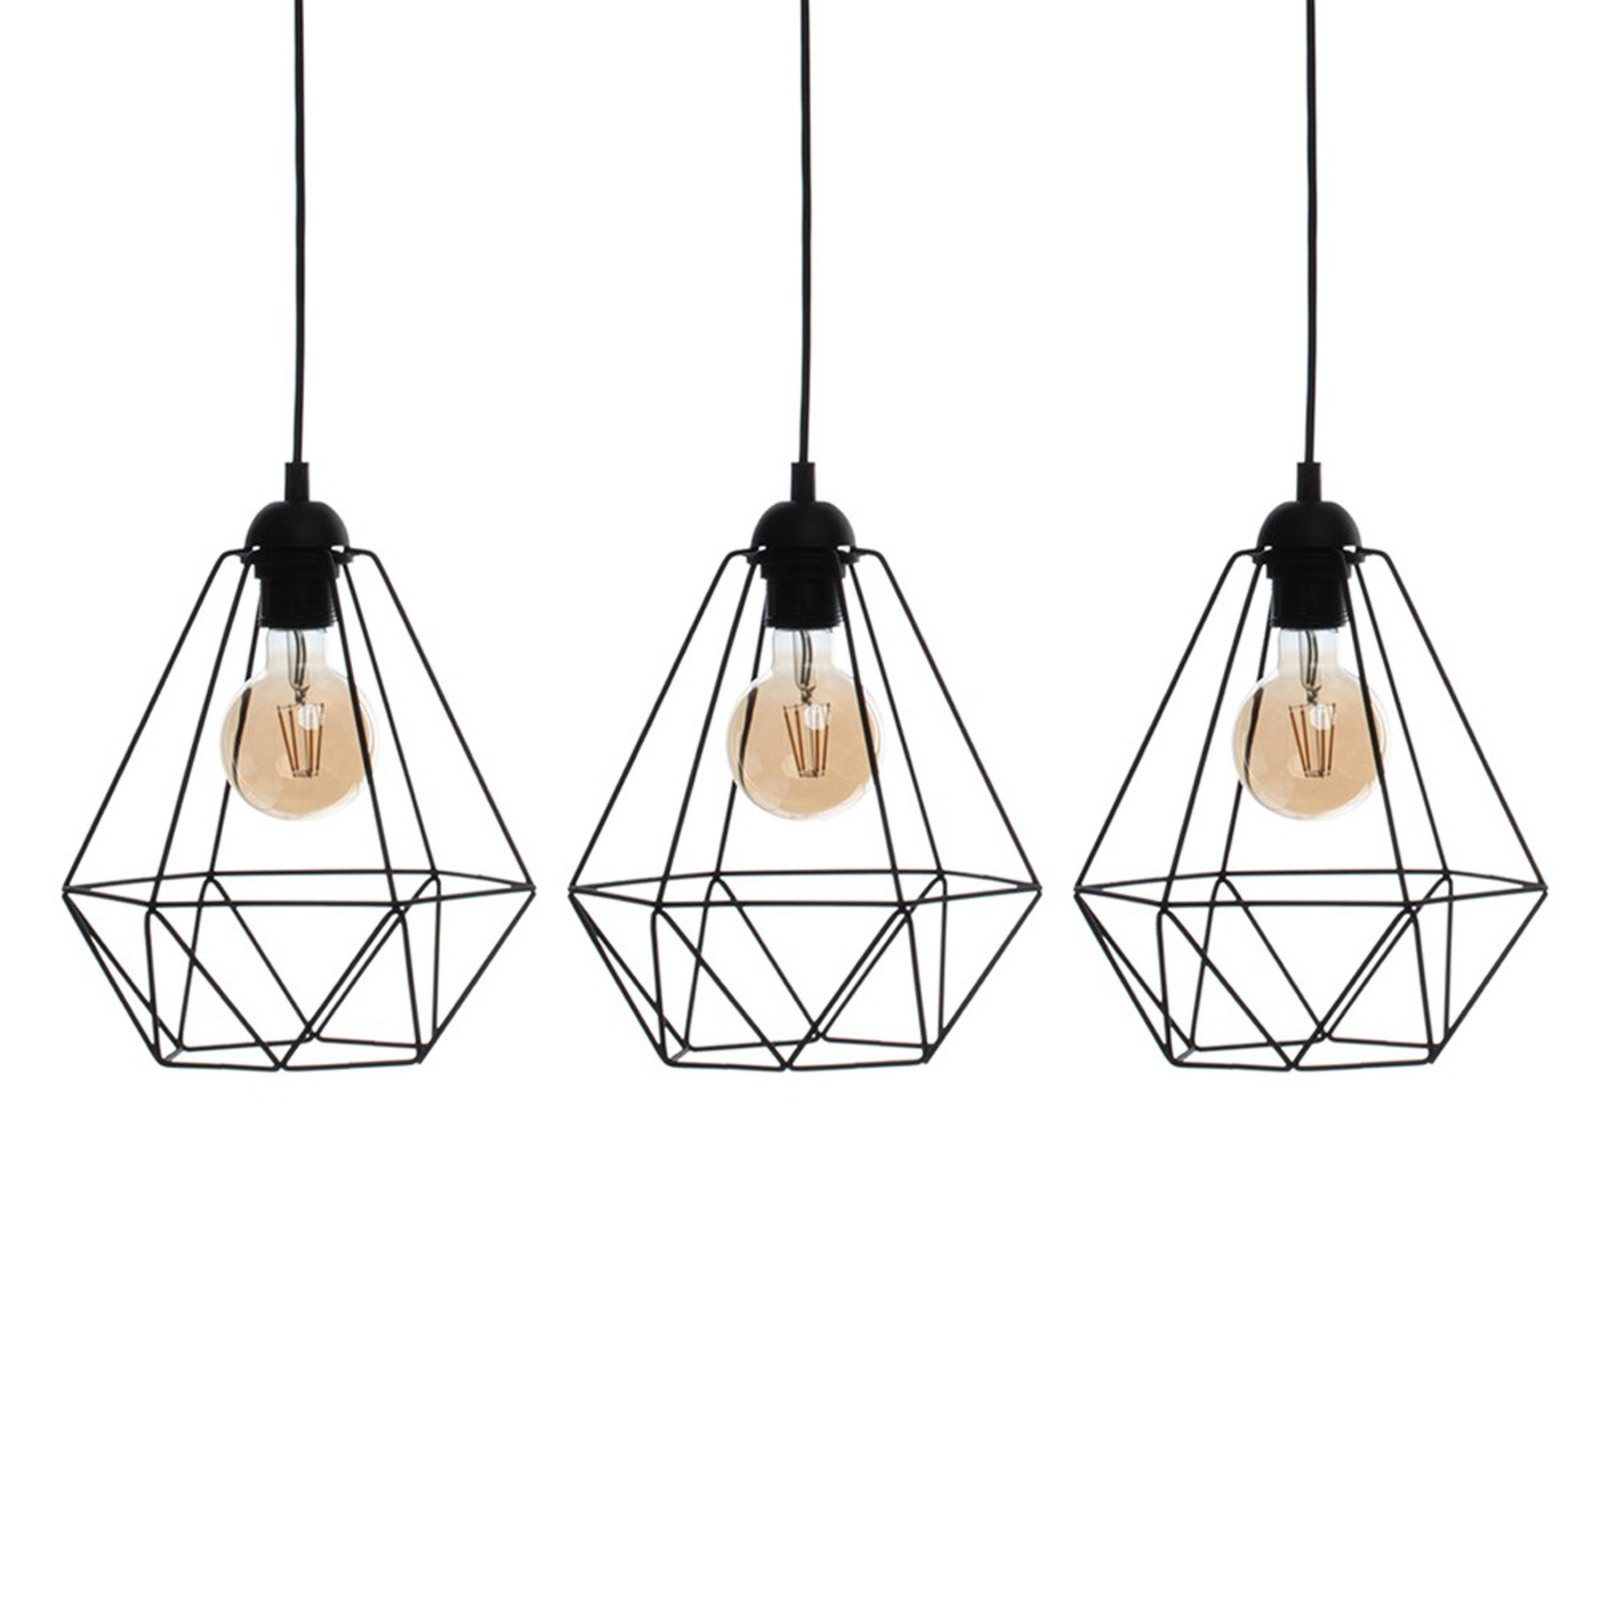 Basket hanging light, black, three-bulb